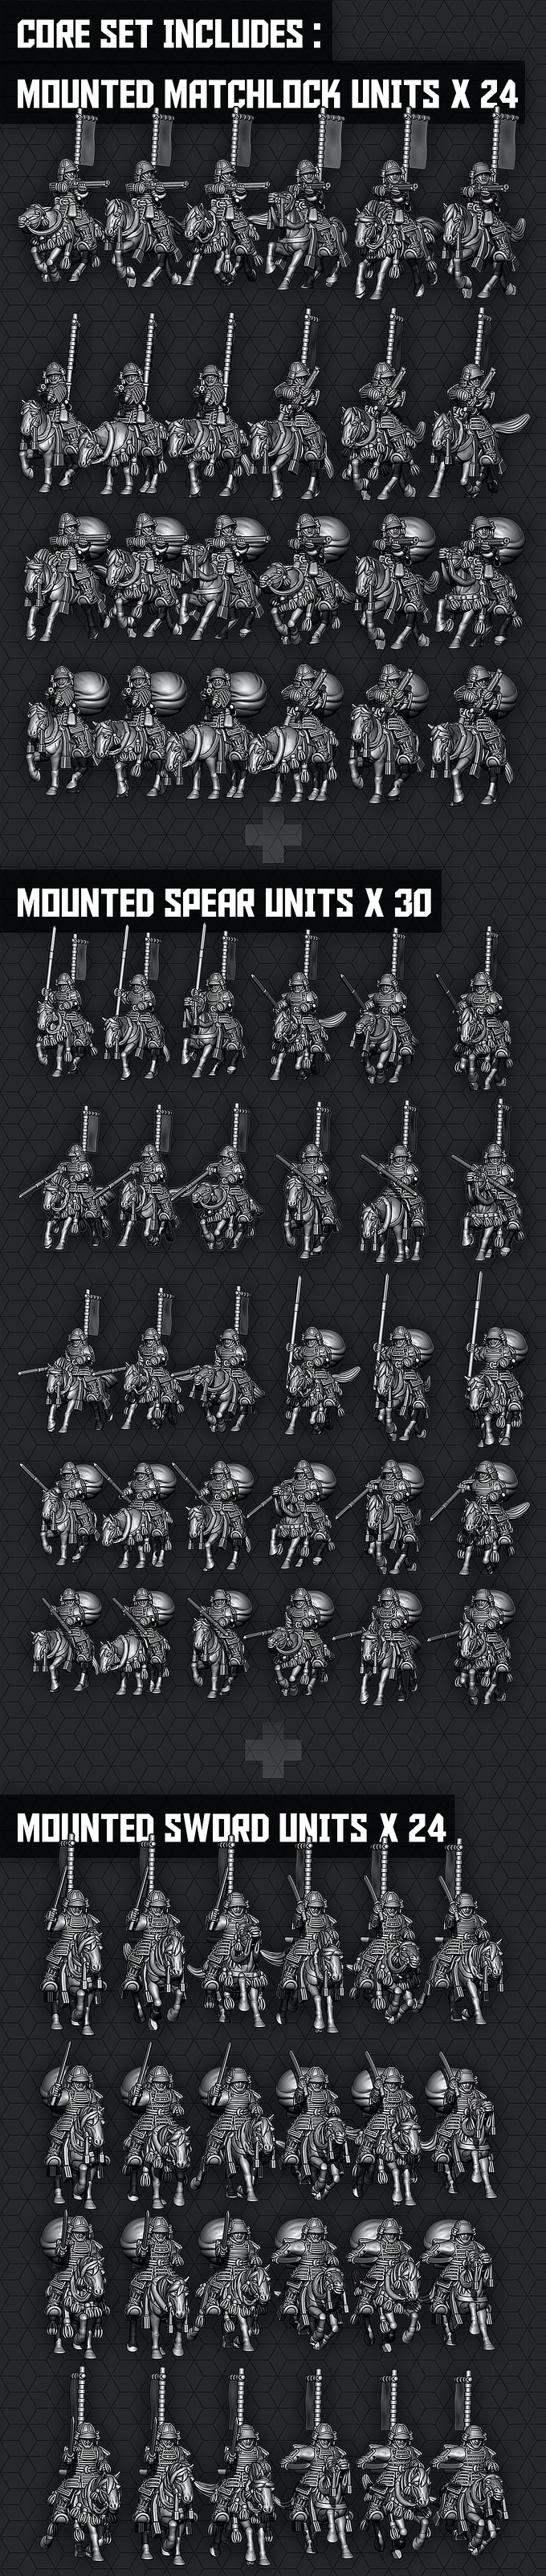 Samurai Warfare Core Set #4 - Smol Miniatures